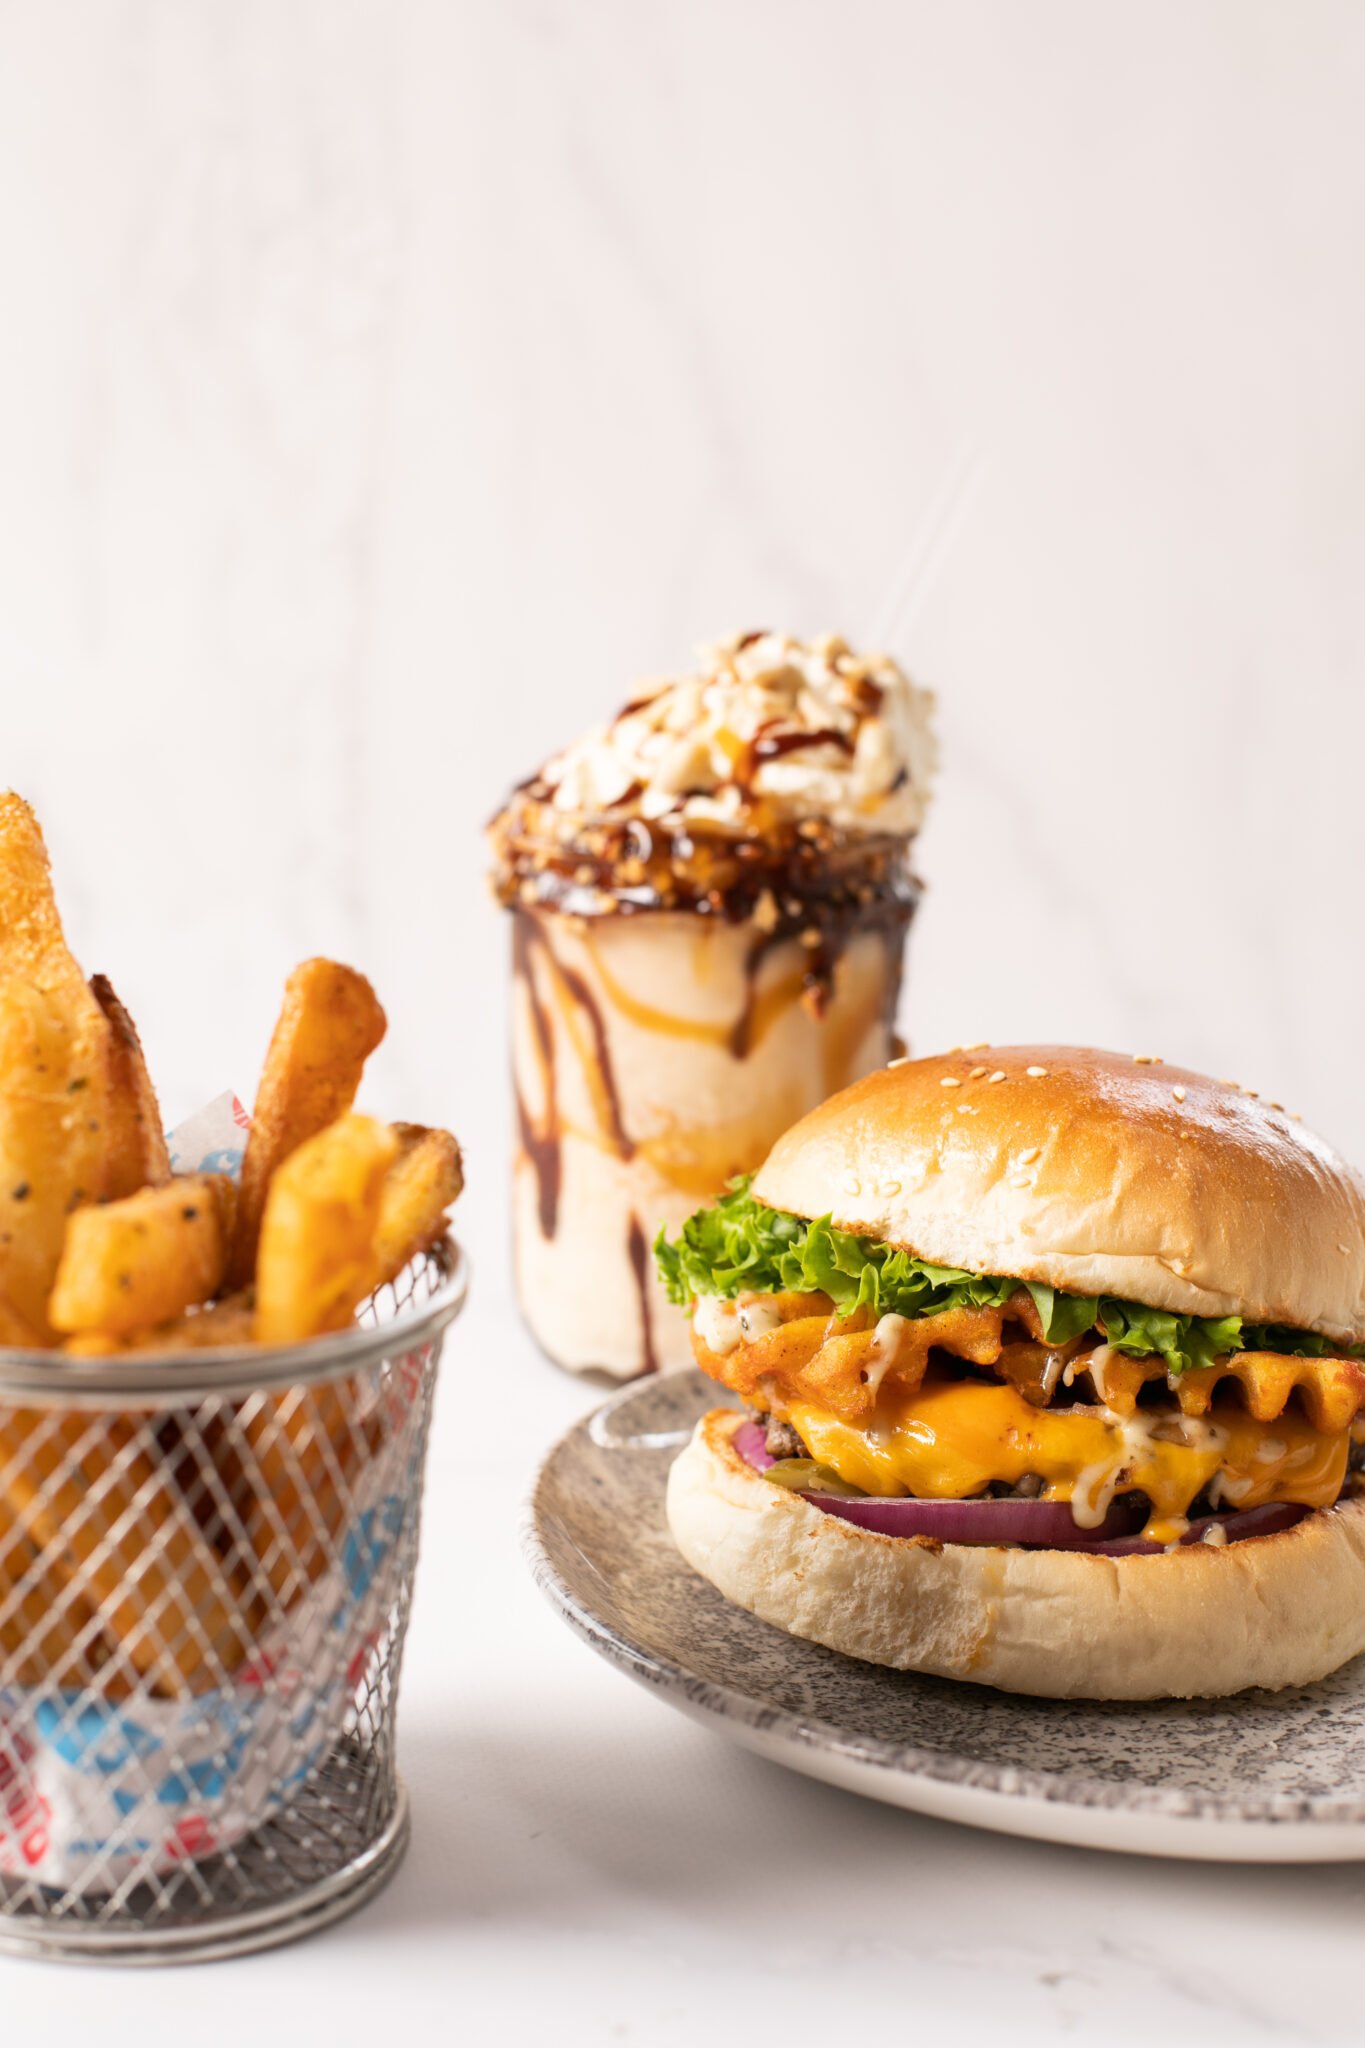 burger, fries and milkshake on plain backdrop